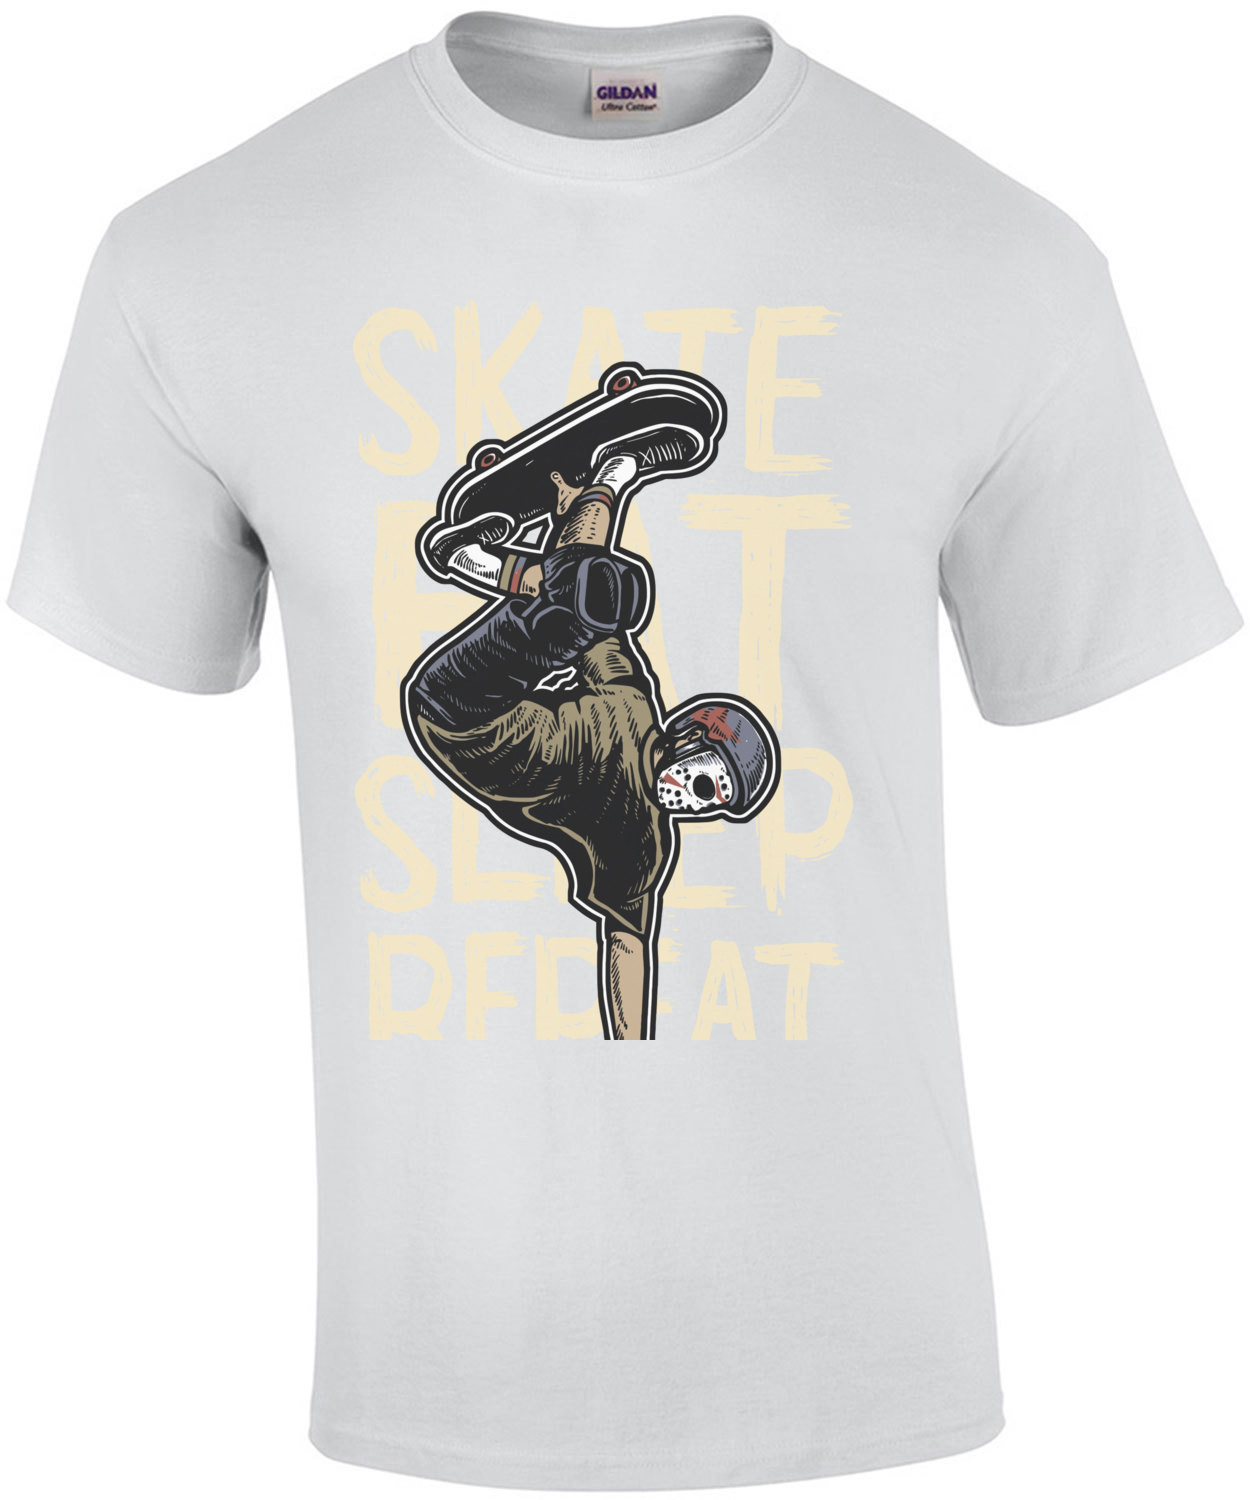 Skate Eat Sleep Repeat T-Shirt